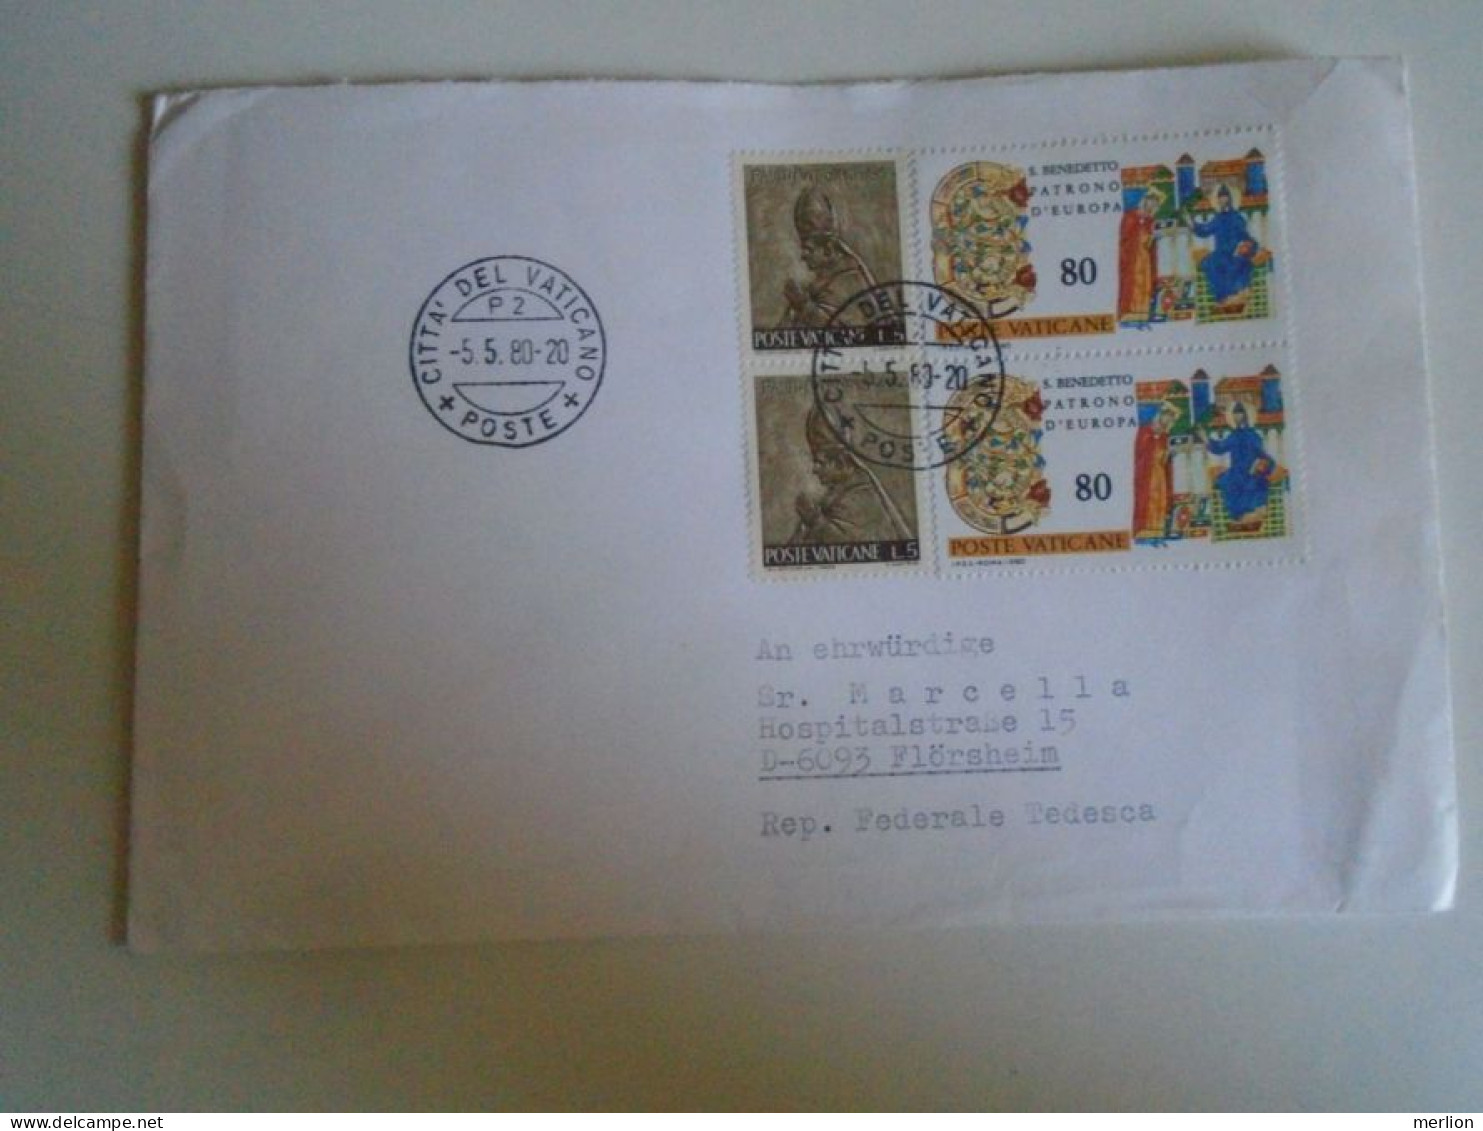 ZA490.29    Vatican  Cover  1980   Sent To D-6093 Flörsheim - Germany - Lettres & Documents